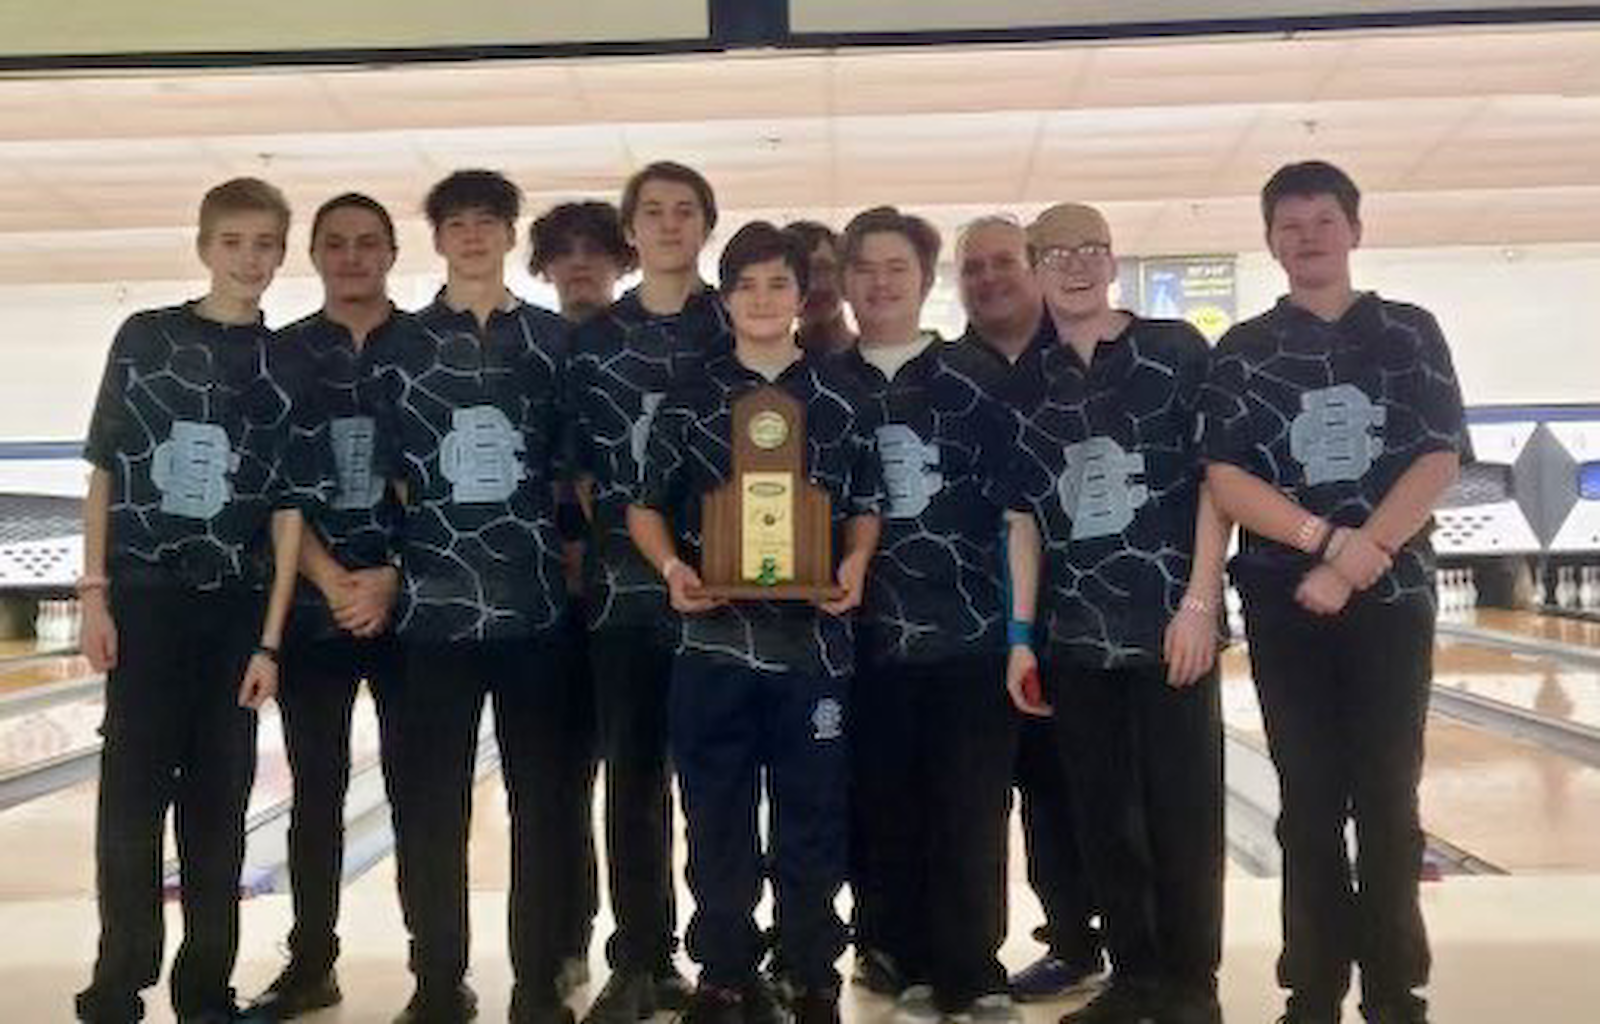 Boys bowling wins 3rd straight regional, Kuryla & Sears qualify for state singles cover photo